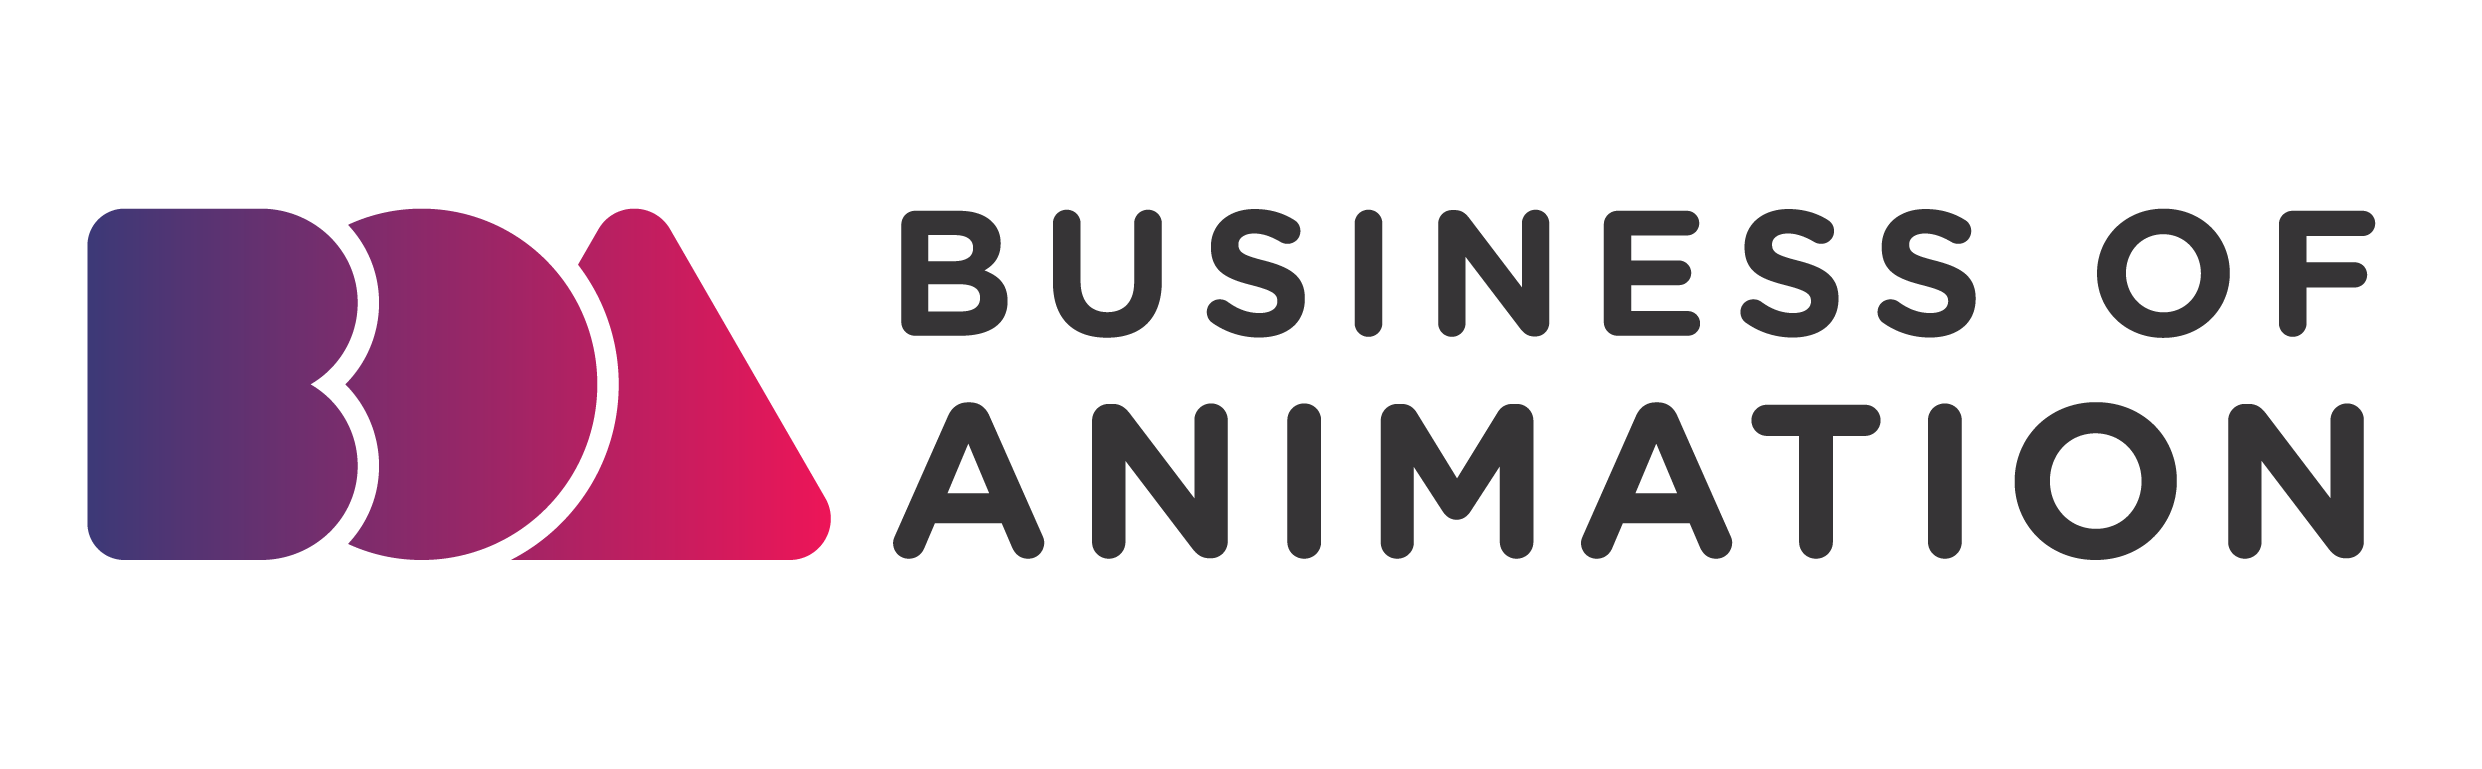 Business of Animation Logo